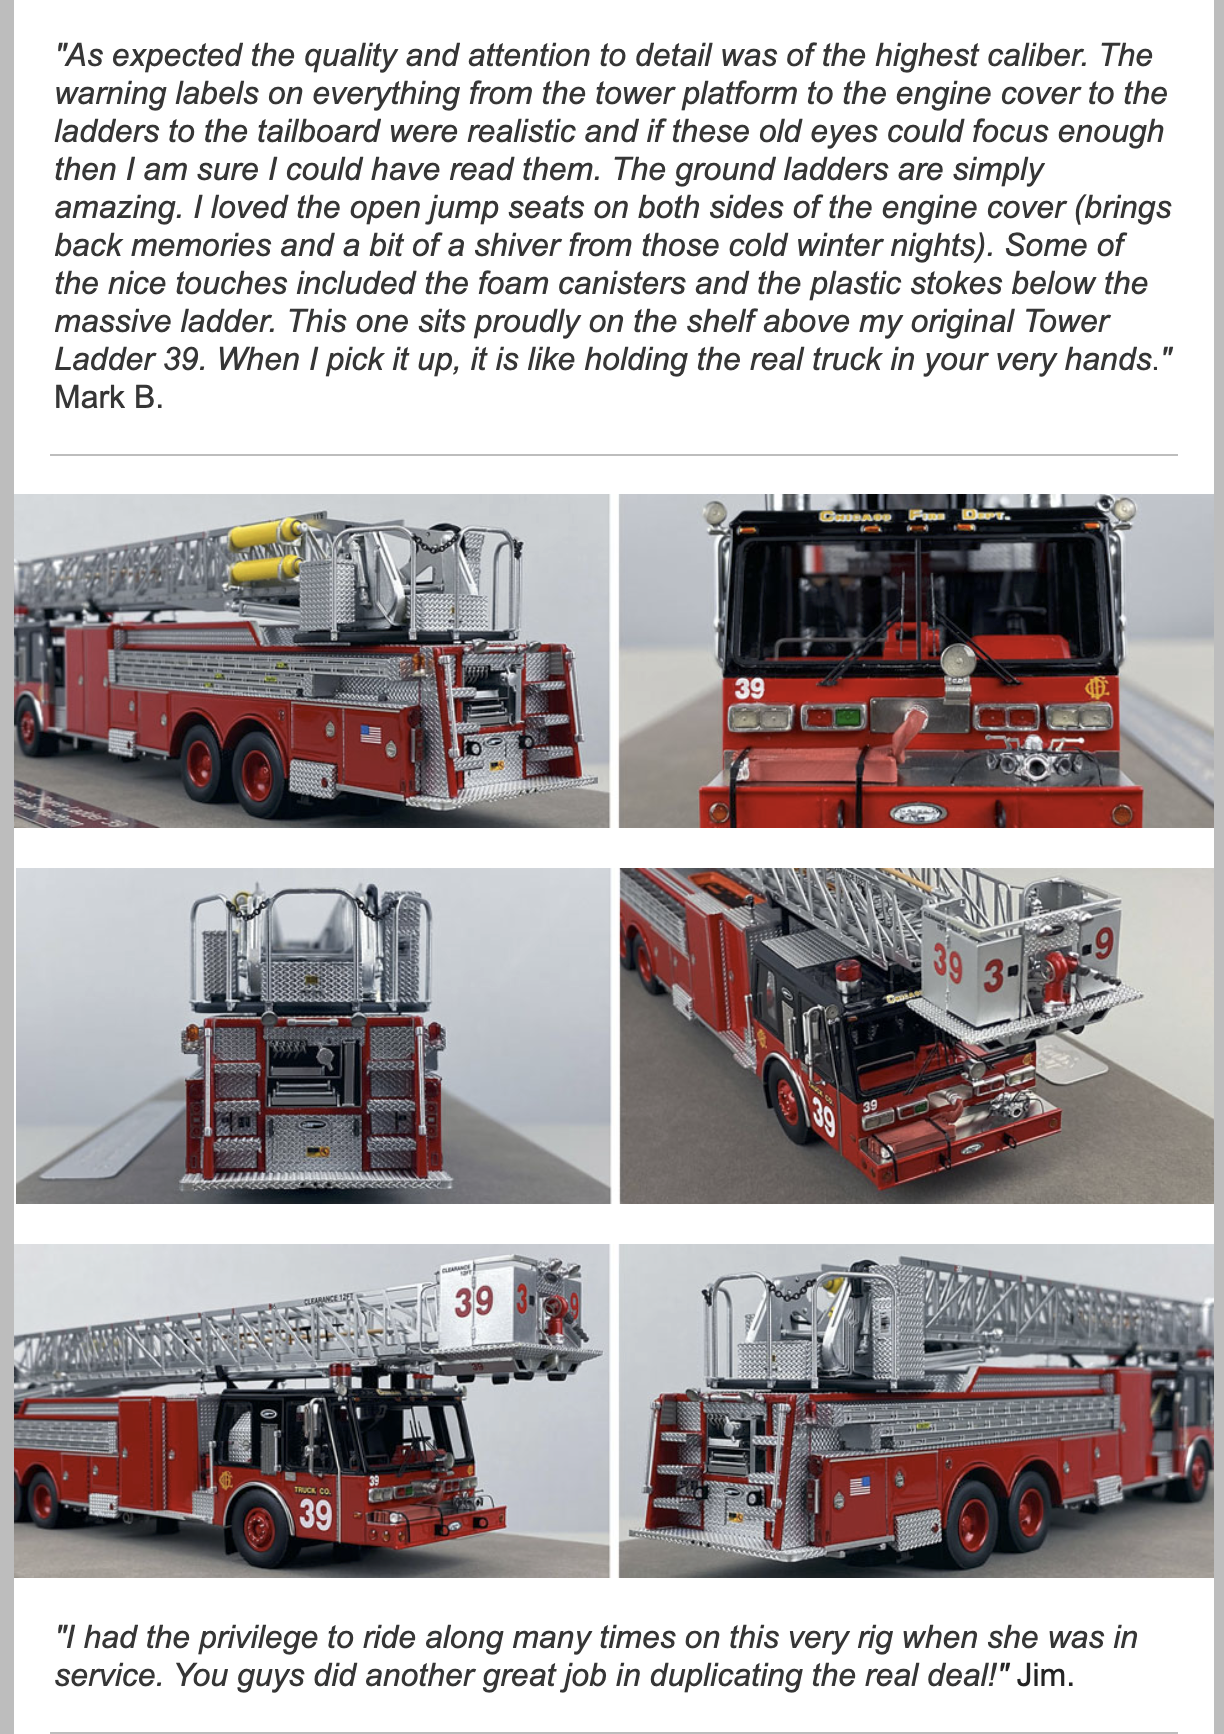 Chicago Fire Department replica models